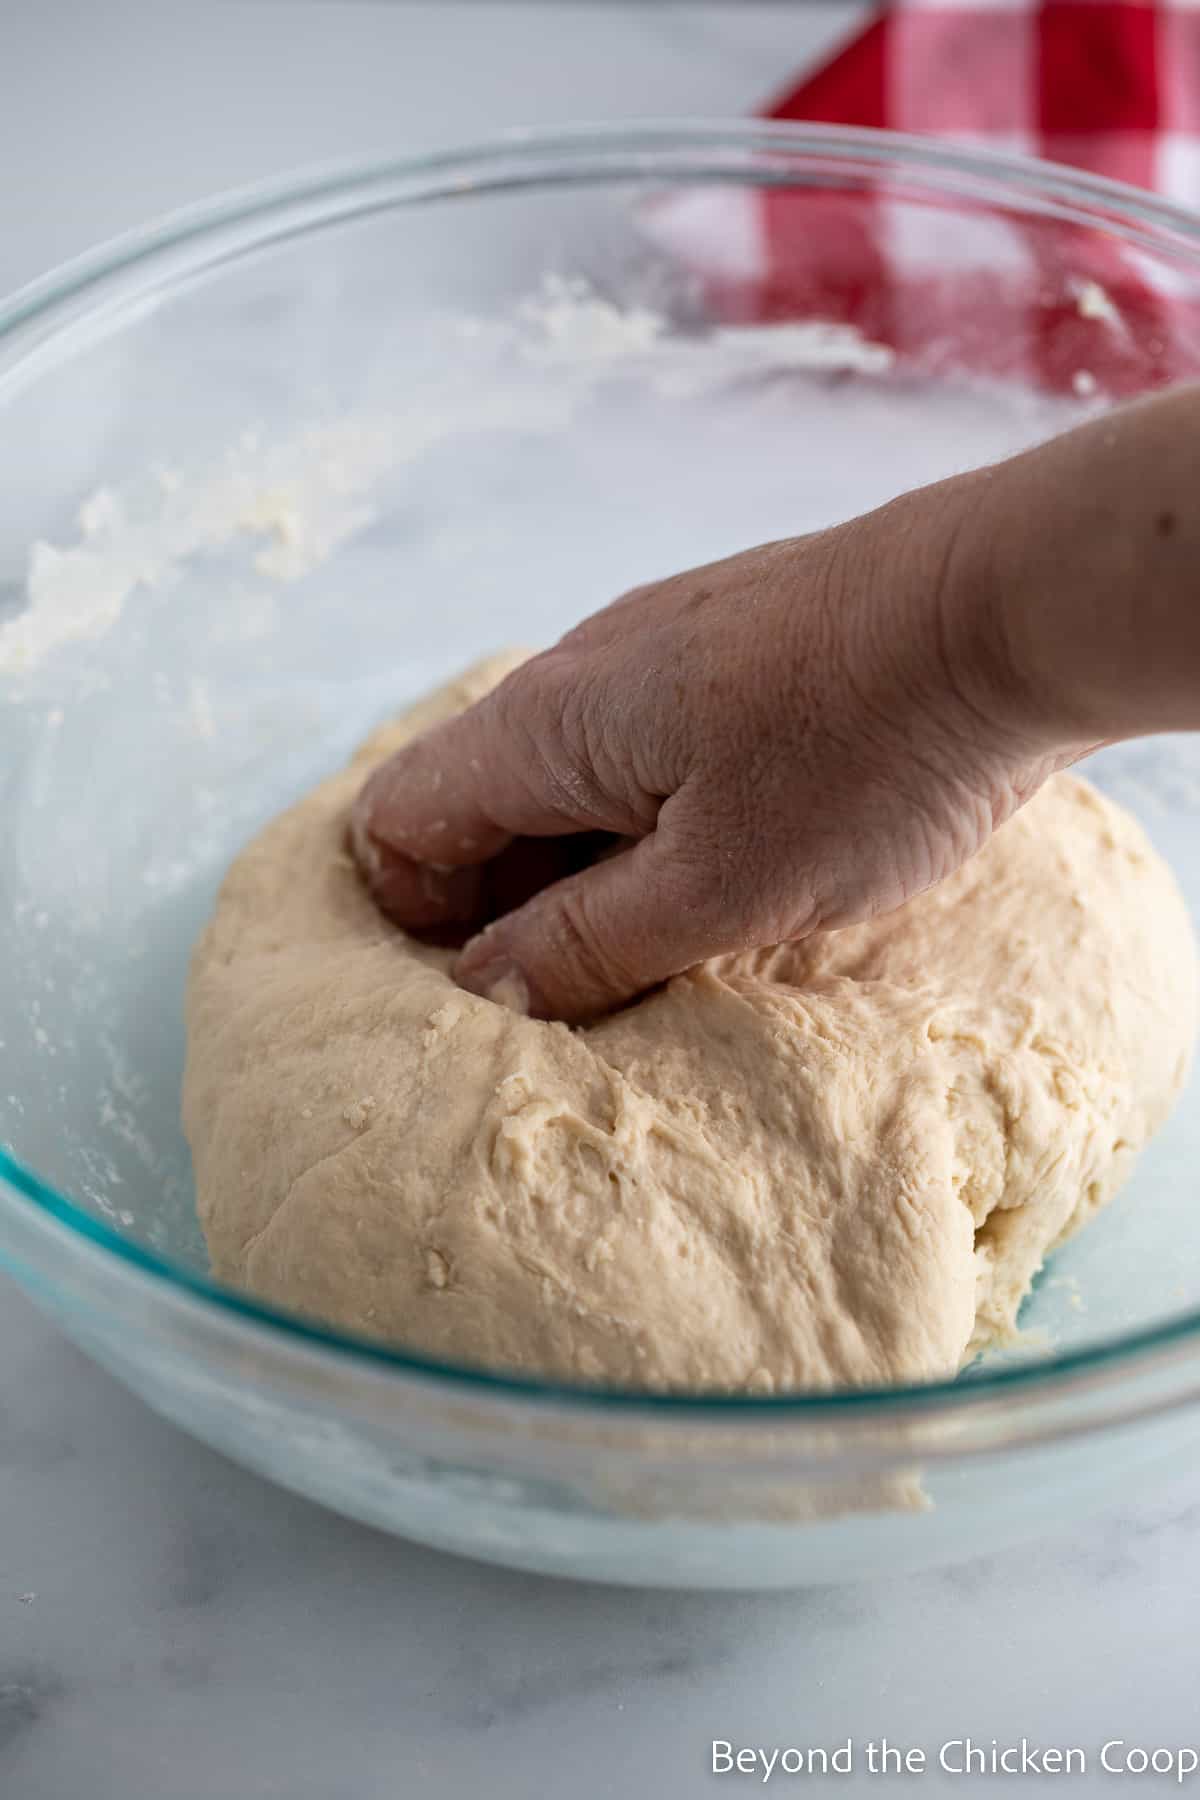 Kneading bread dough. 